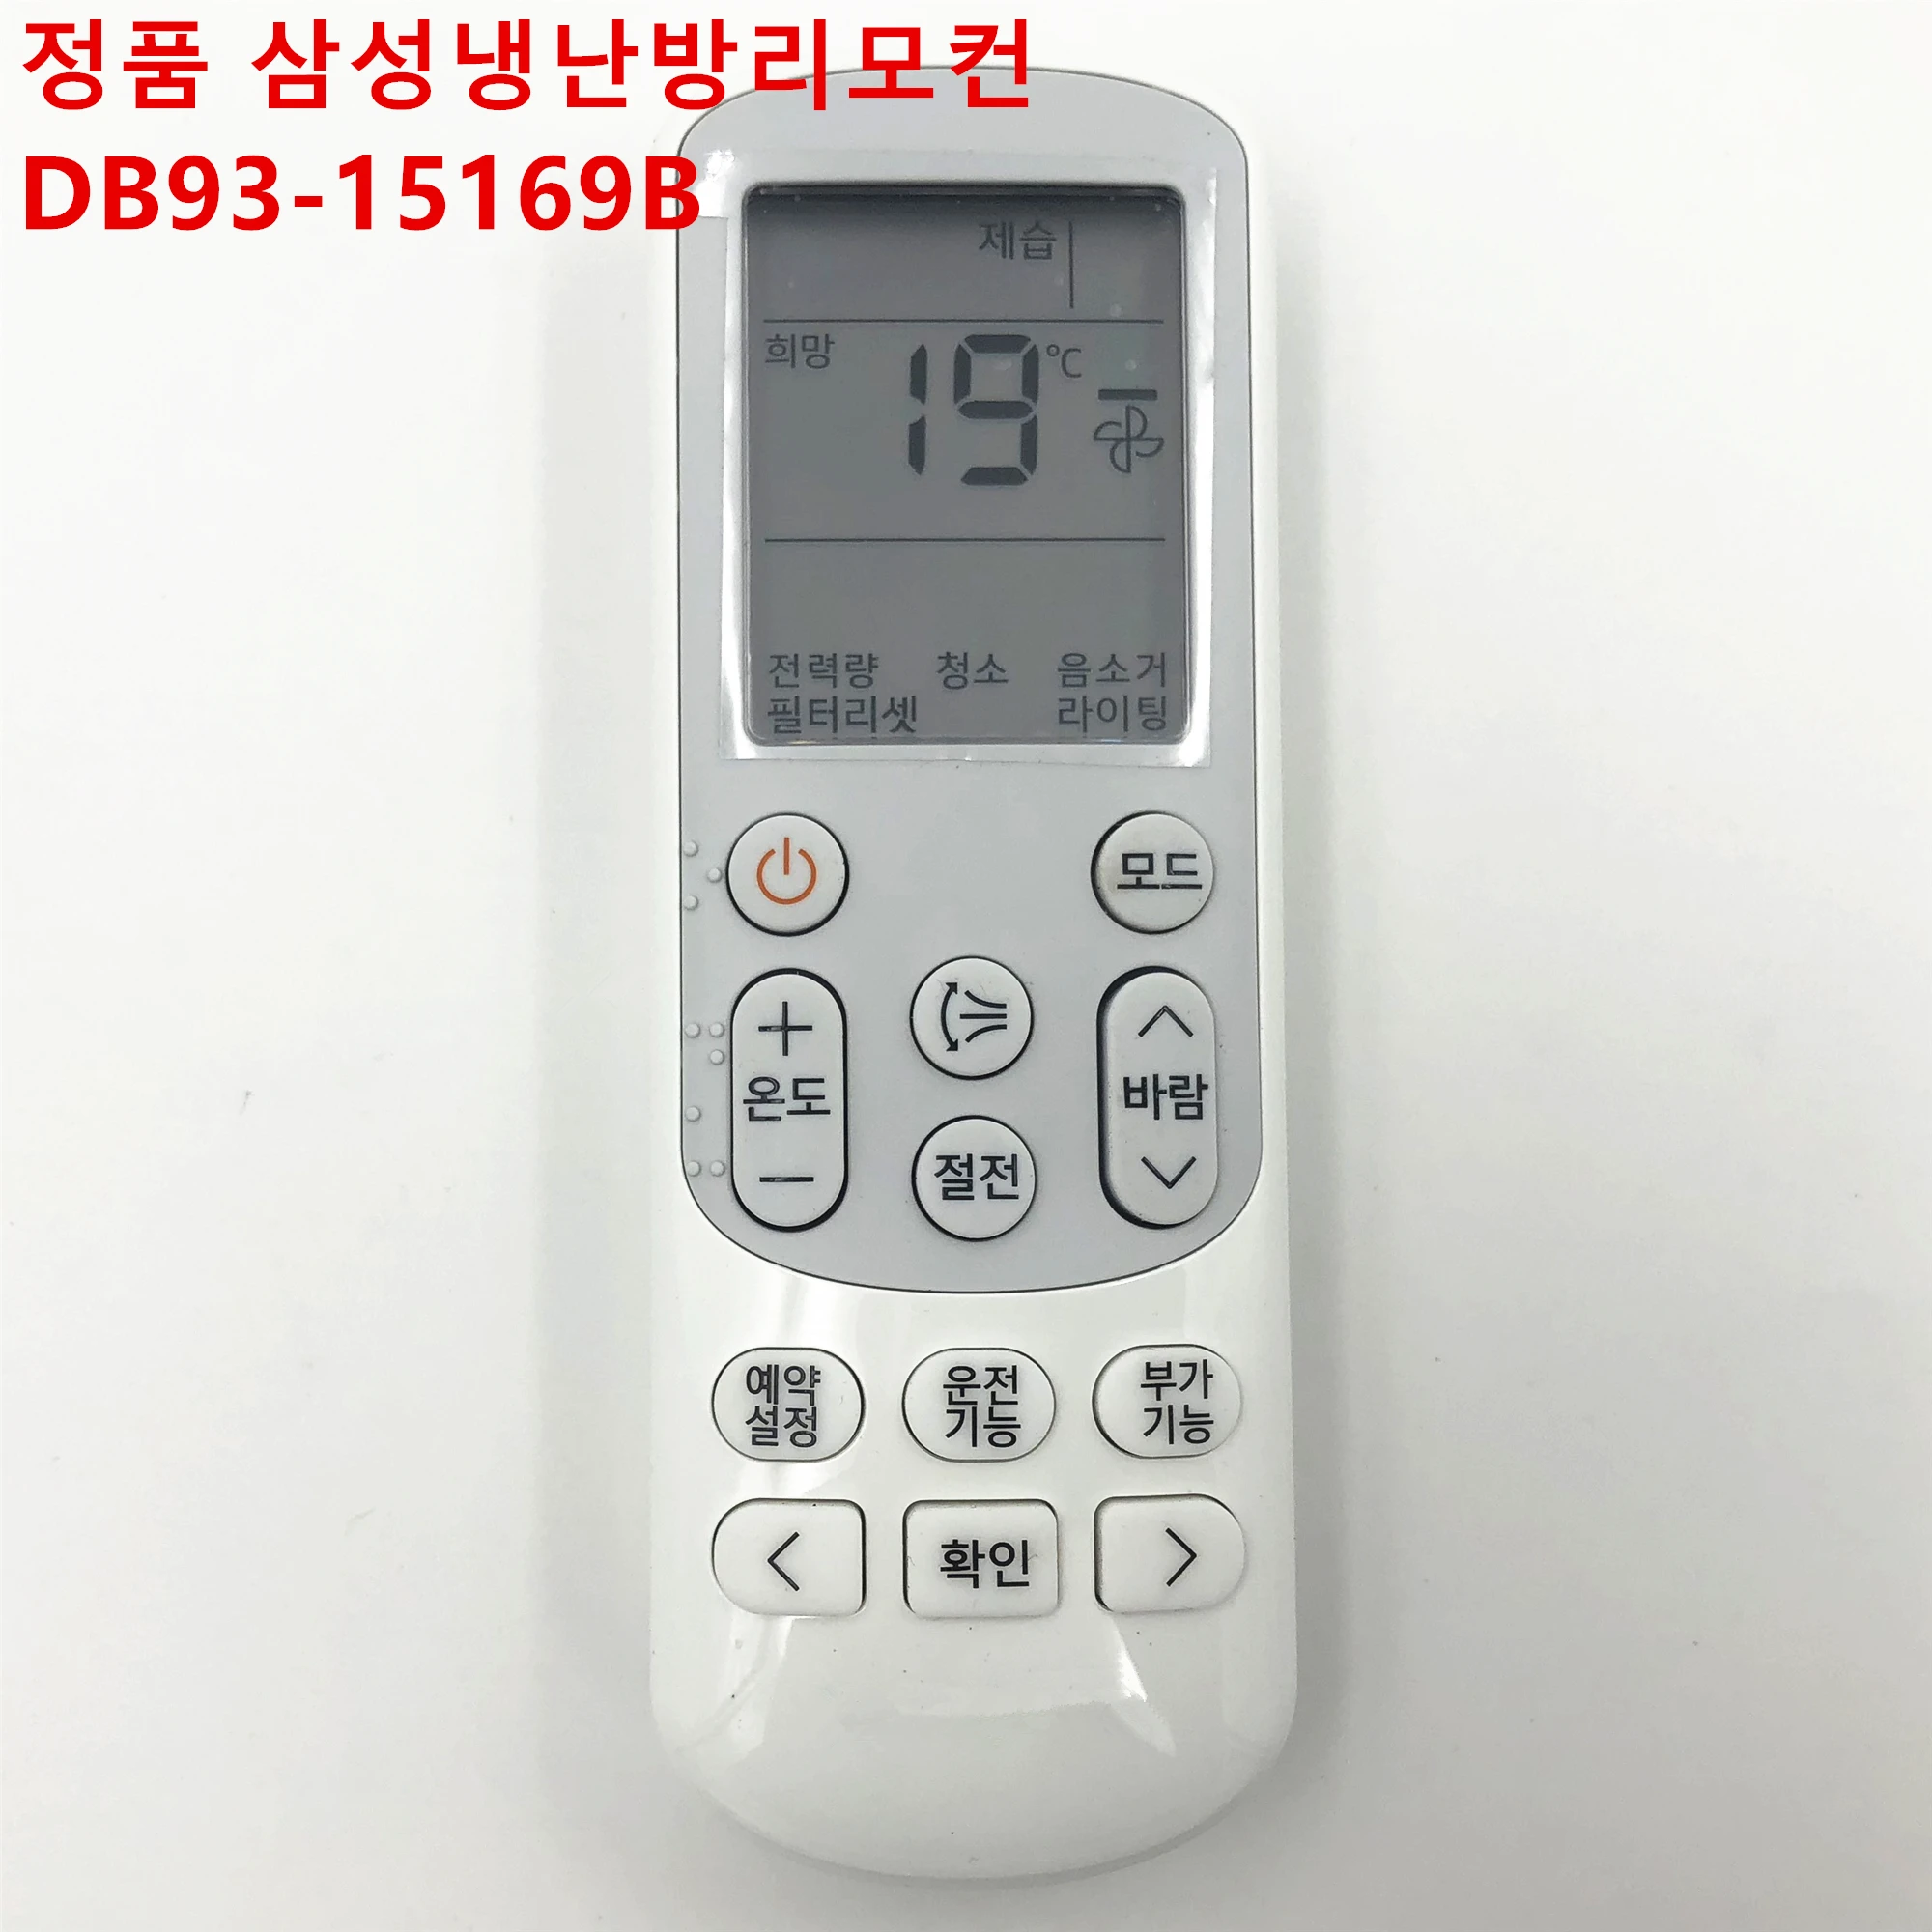 

Original AC A/C Remote Control DB93-15169B Suitable For SAMSUNG Air Conditioner